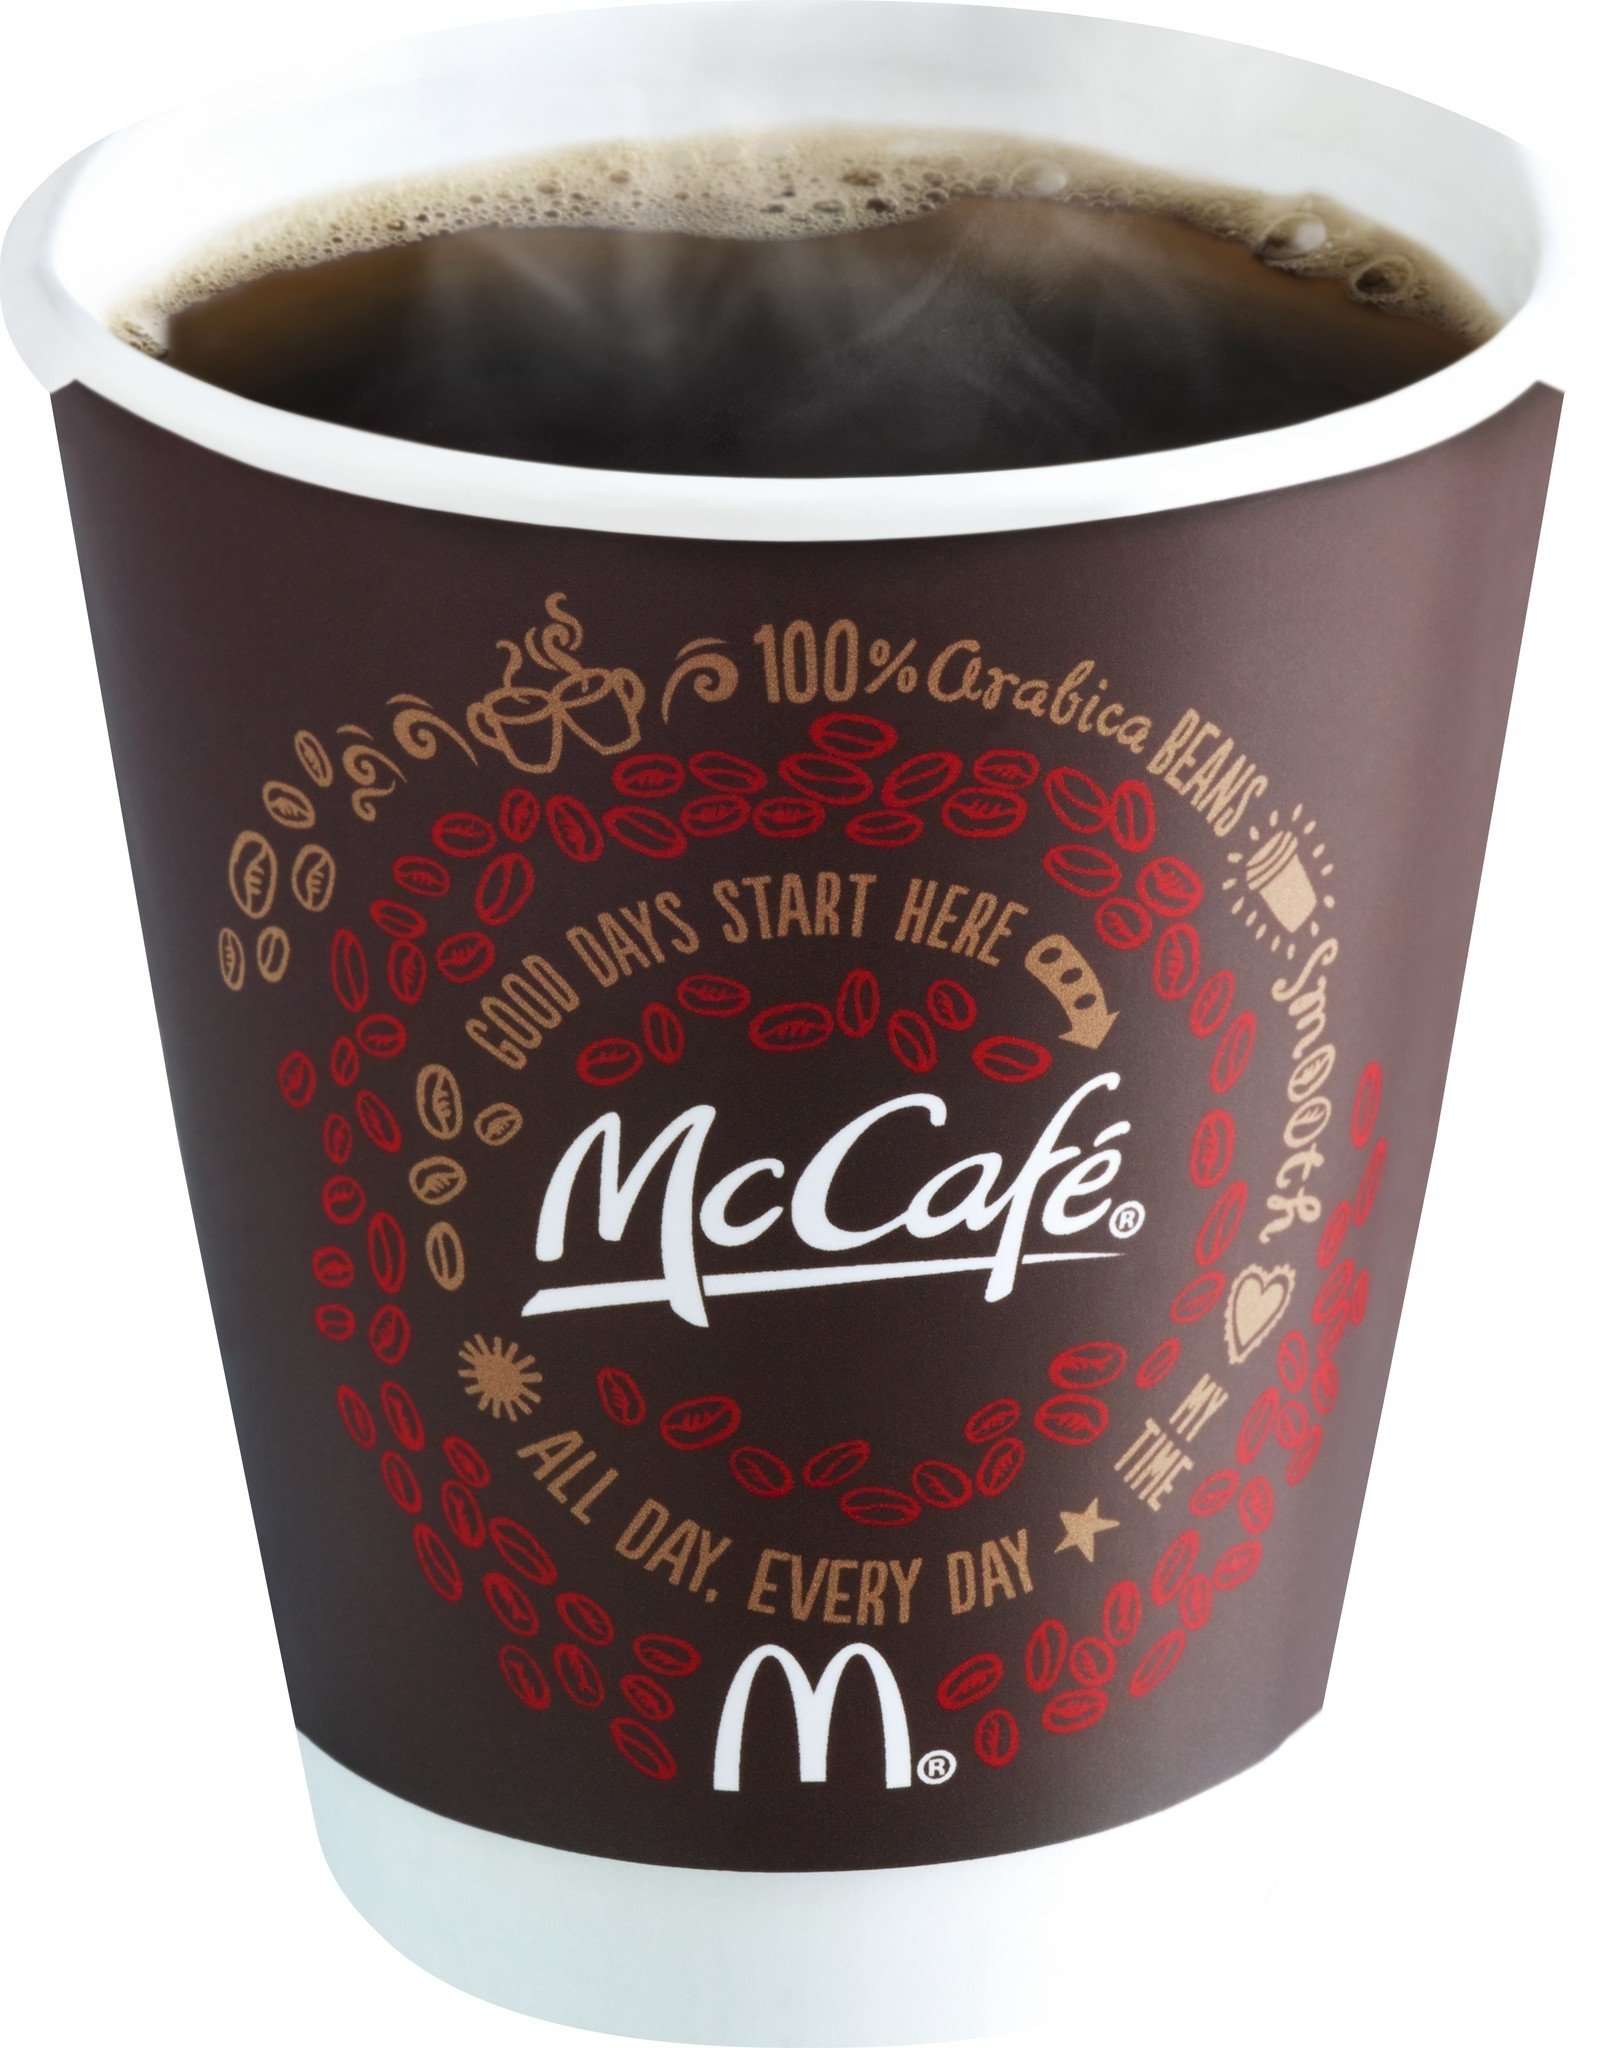 Free Coffee At McDonald